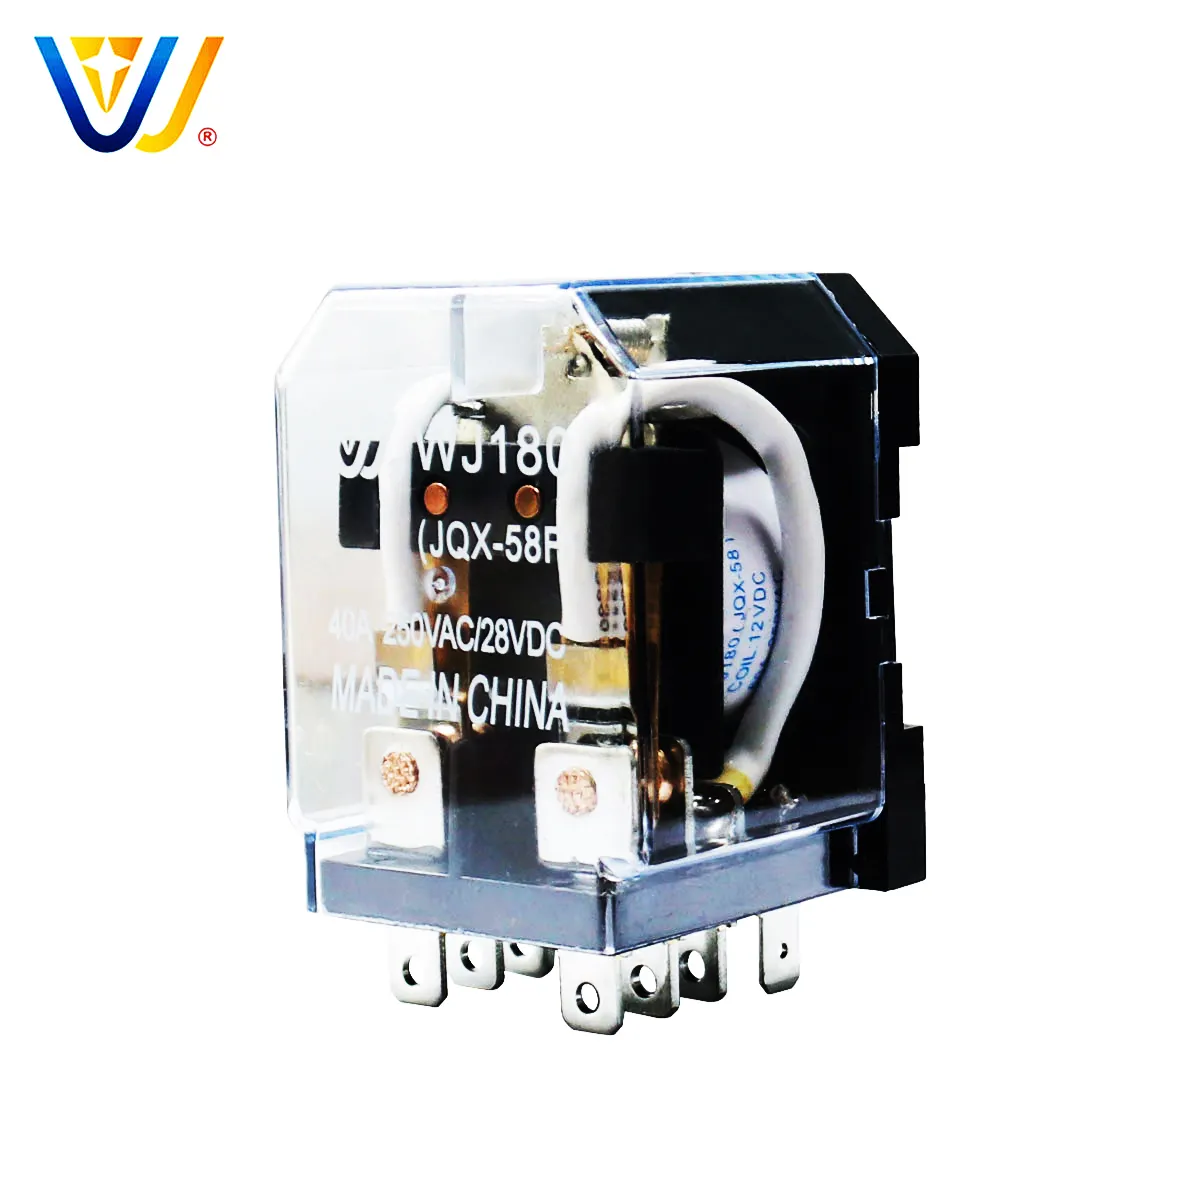 Wanjia high quality jqx-58f 40a dpst dpdt Mini original Power Relay 12 volt 40 amp pin/pcb Universal Relay AC Circuit Breaker